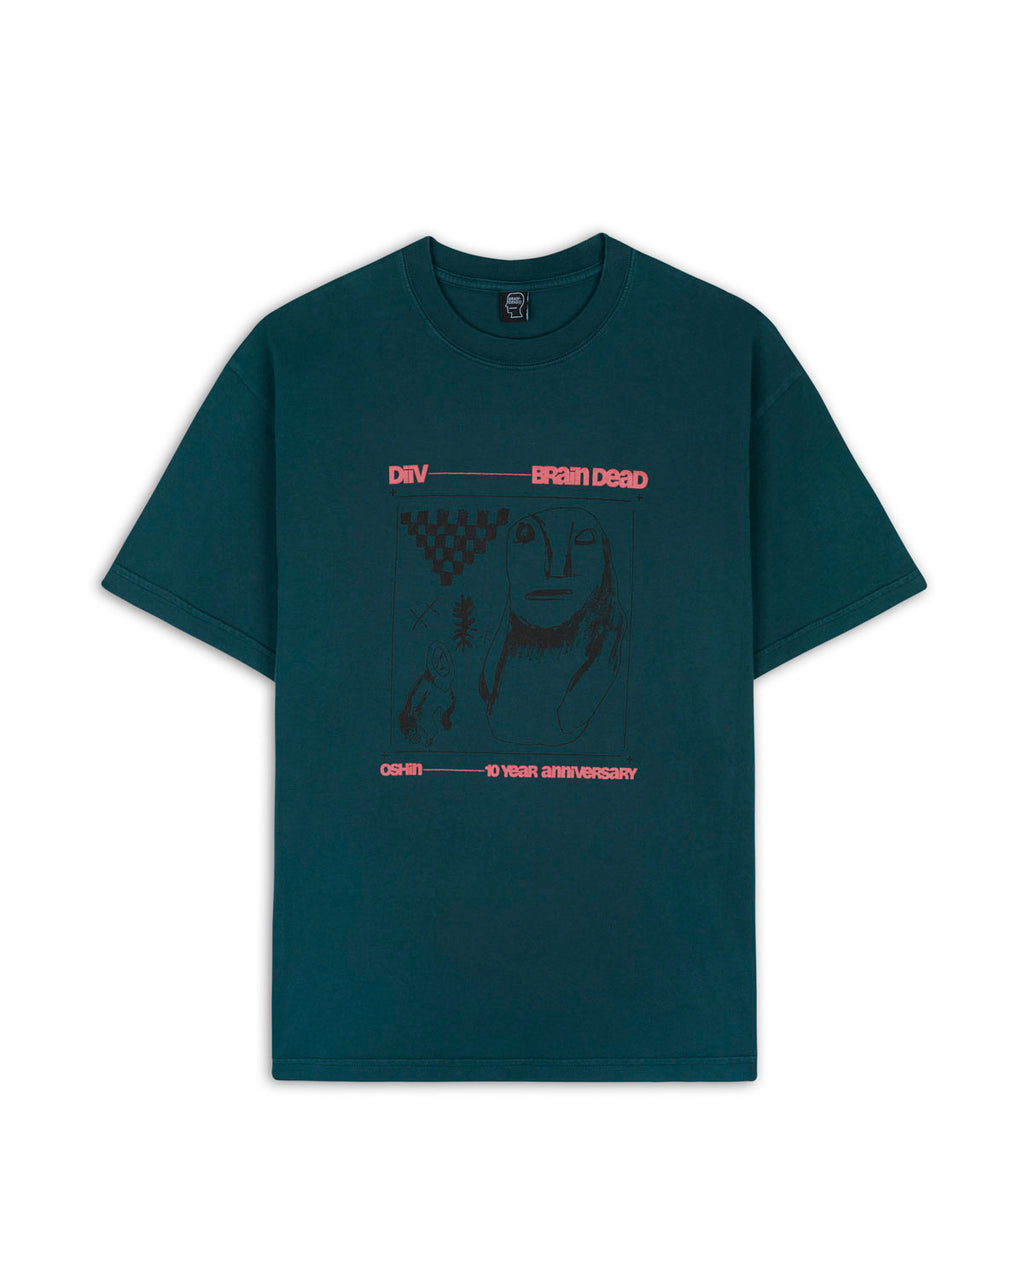 Brain Dead x DIIV "The Oshin" Ten Year Anniversary T-Shirt - Teal